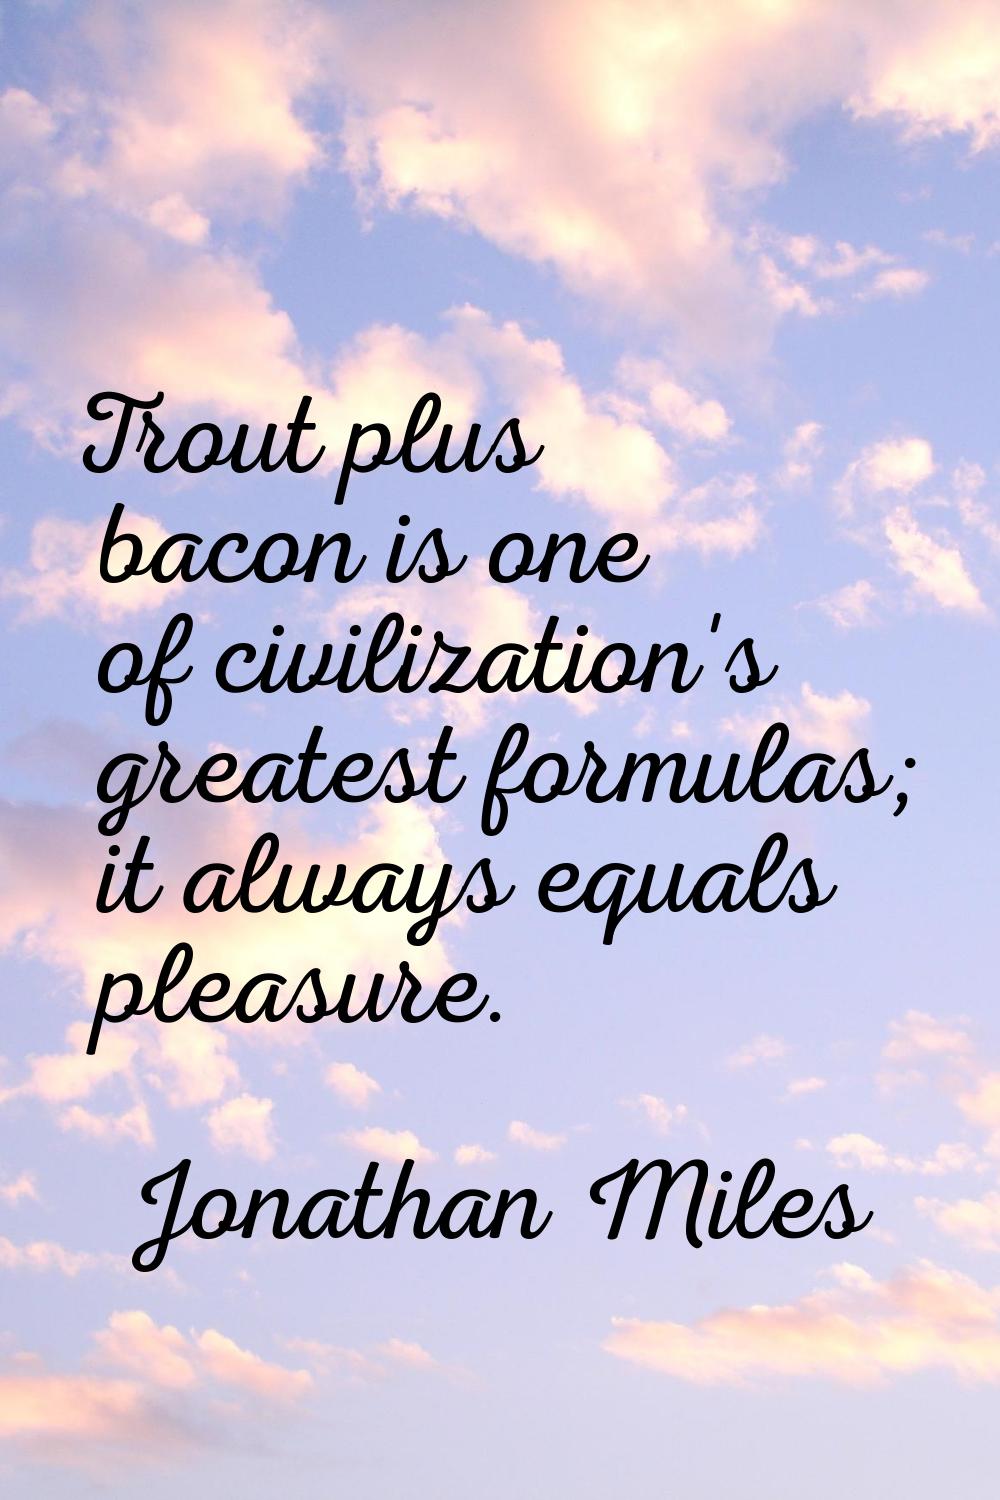 Trout plus bacon is one of civilization's greatest formulas; it always equals pleasure.